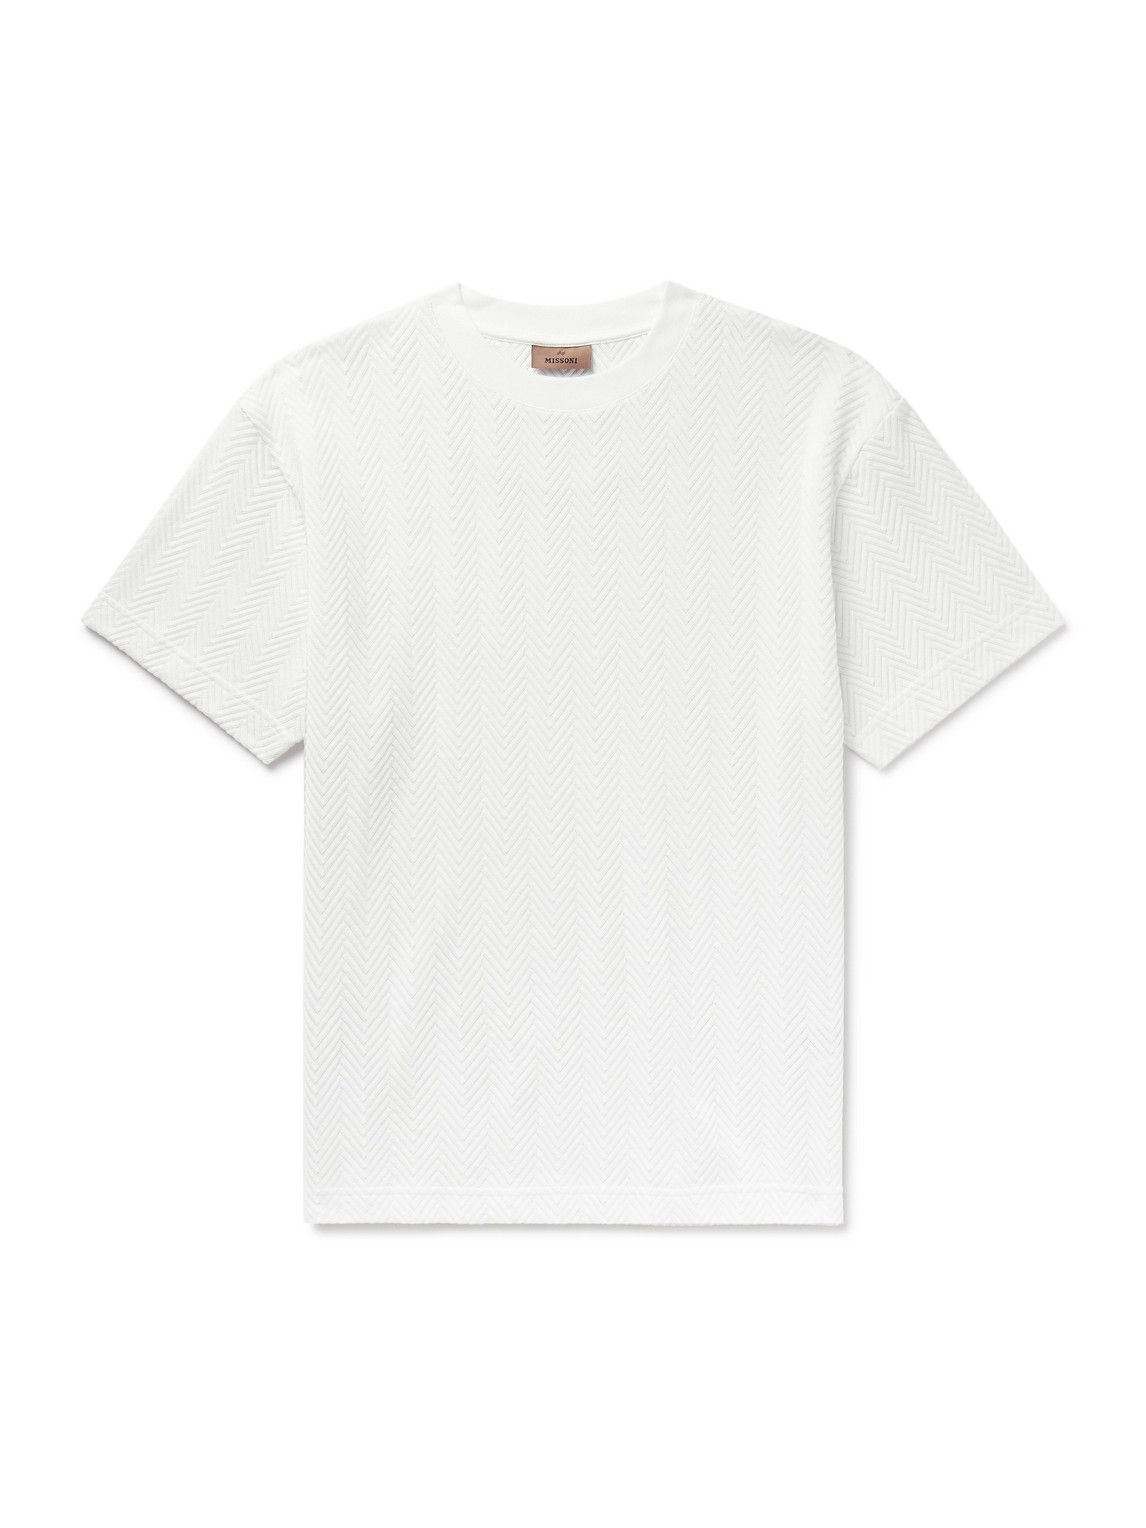 Missoni - Jacquard-Knit Cotton-Blend T-Shirt - Men - White - XL von Missoni